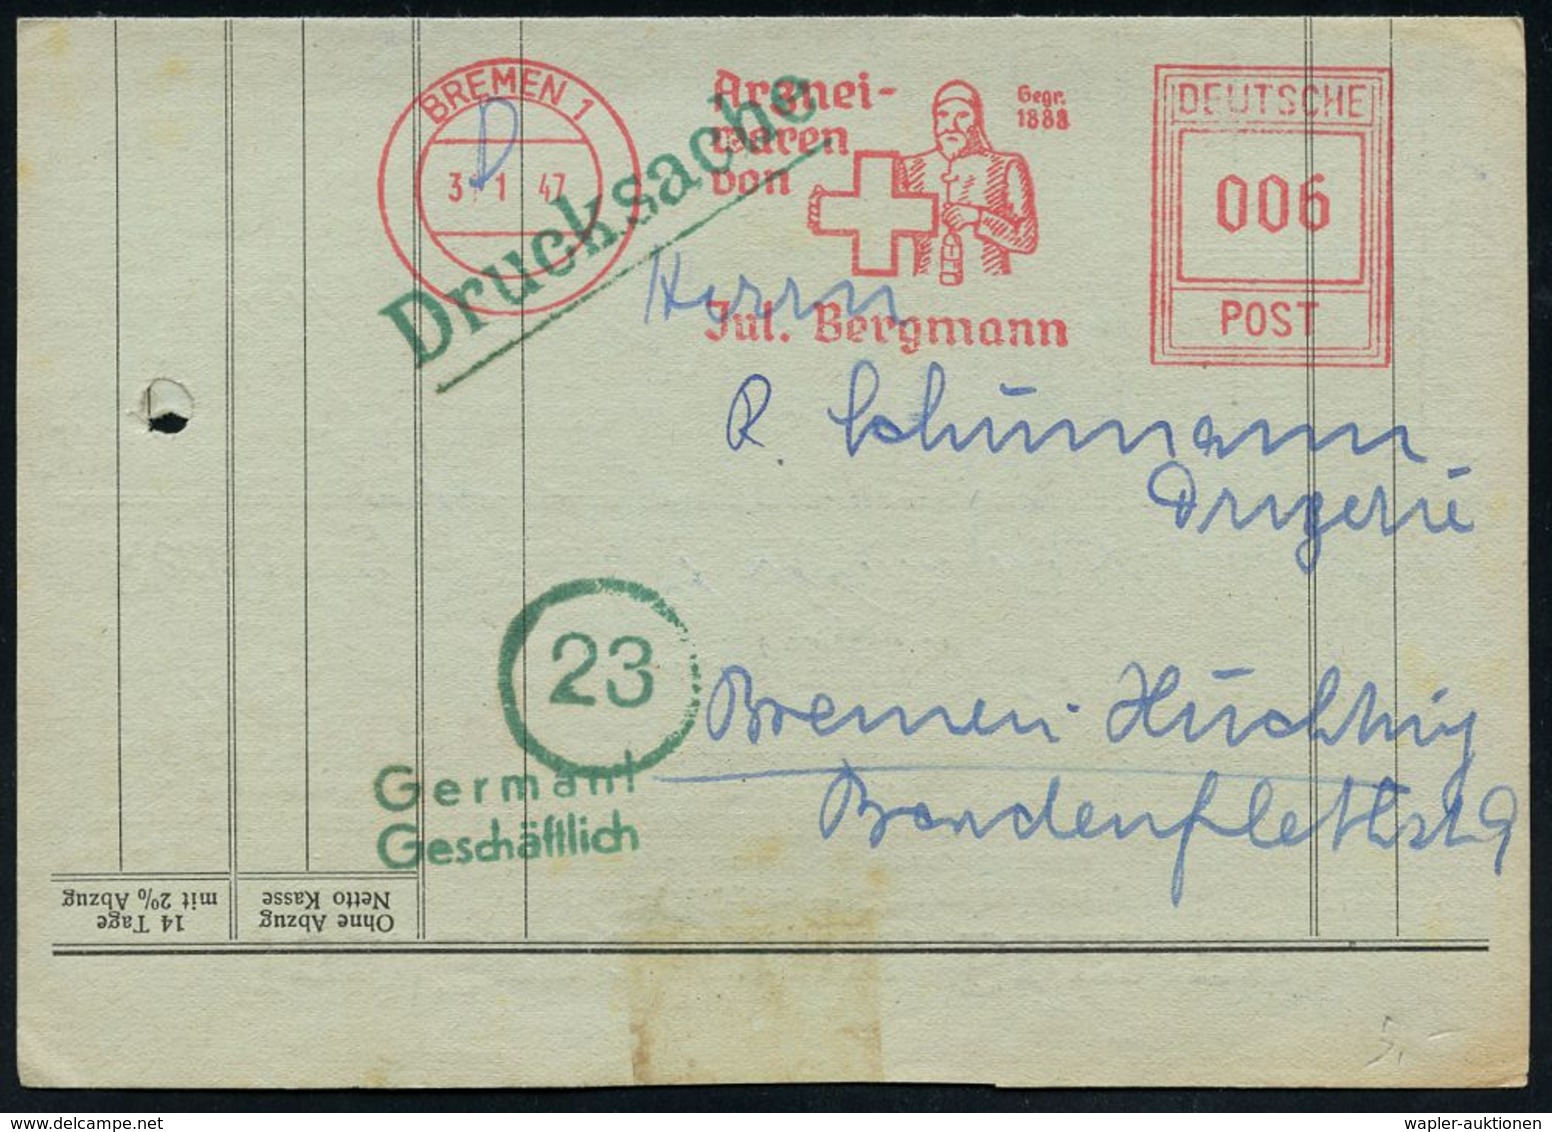 PHARMAZIE / MEDIKAMENTE : BREMEN 1/ Arznei-/ Waren/ Von/ Jul.Bergmann/ Gegr.1888 1946/47 3 Verschiedene AFS: Francotyp " - Farmacia